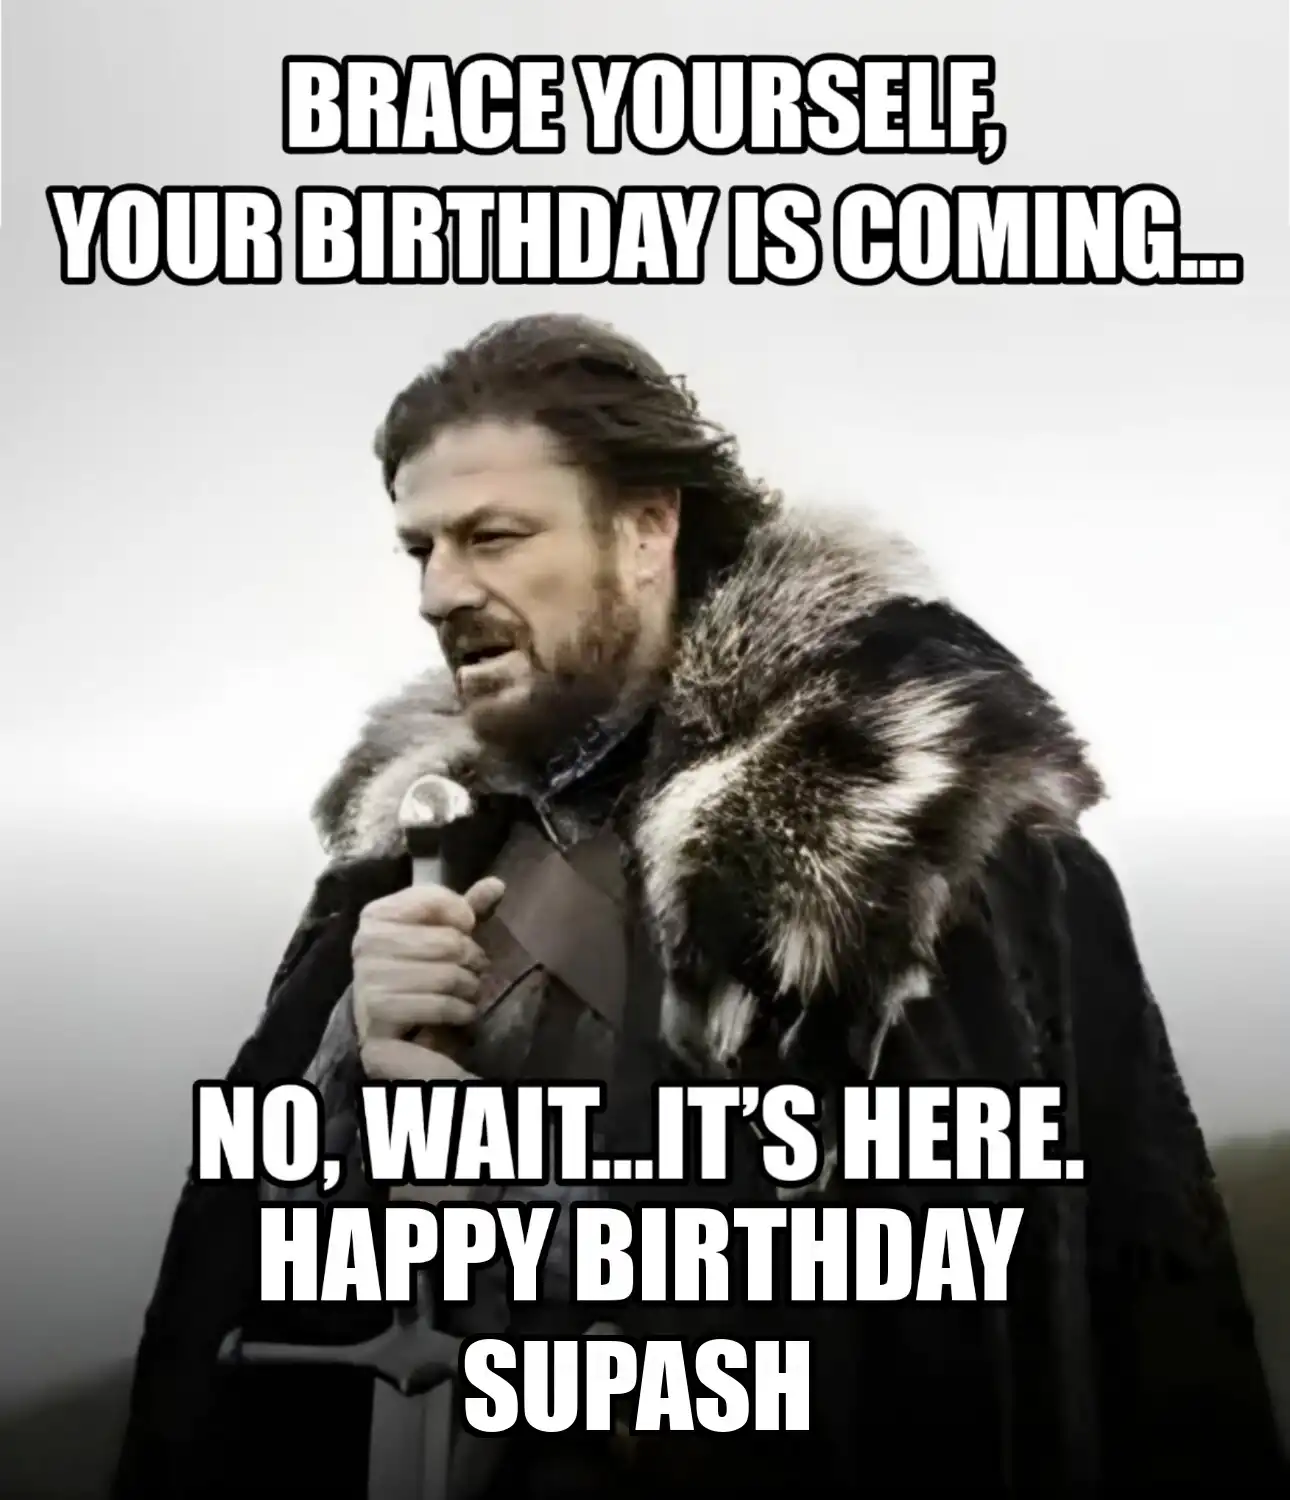 Happy Birthday Supash Brace Yourself Your Birthday Is Coming Meme